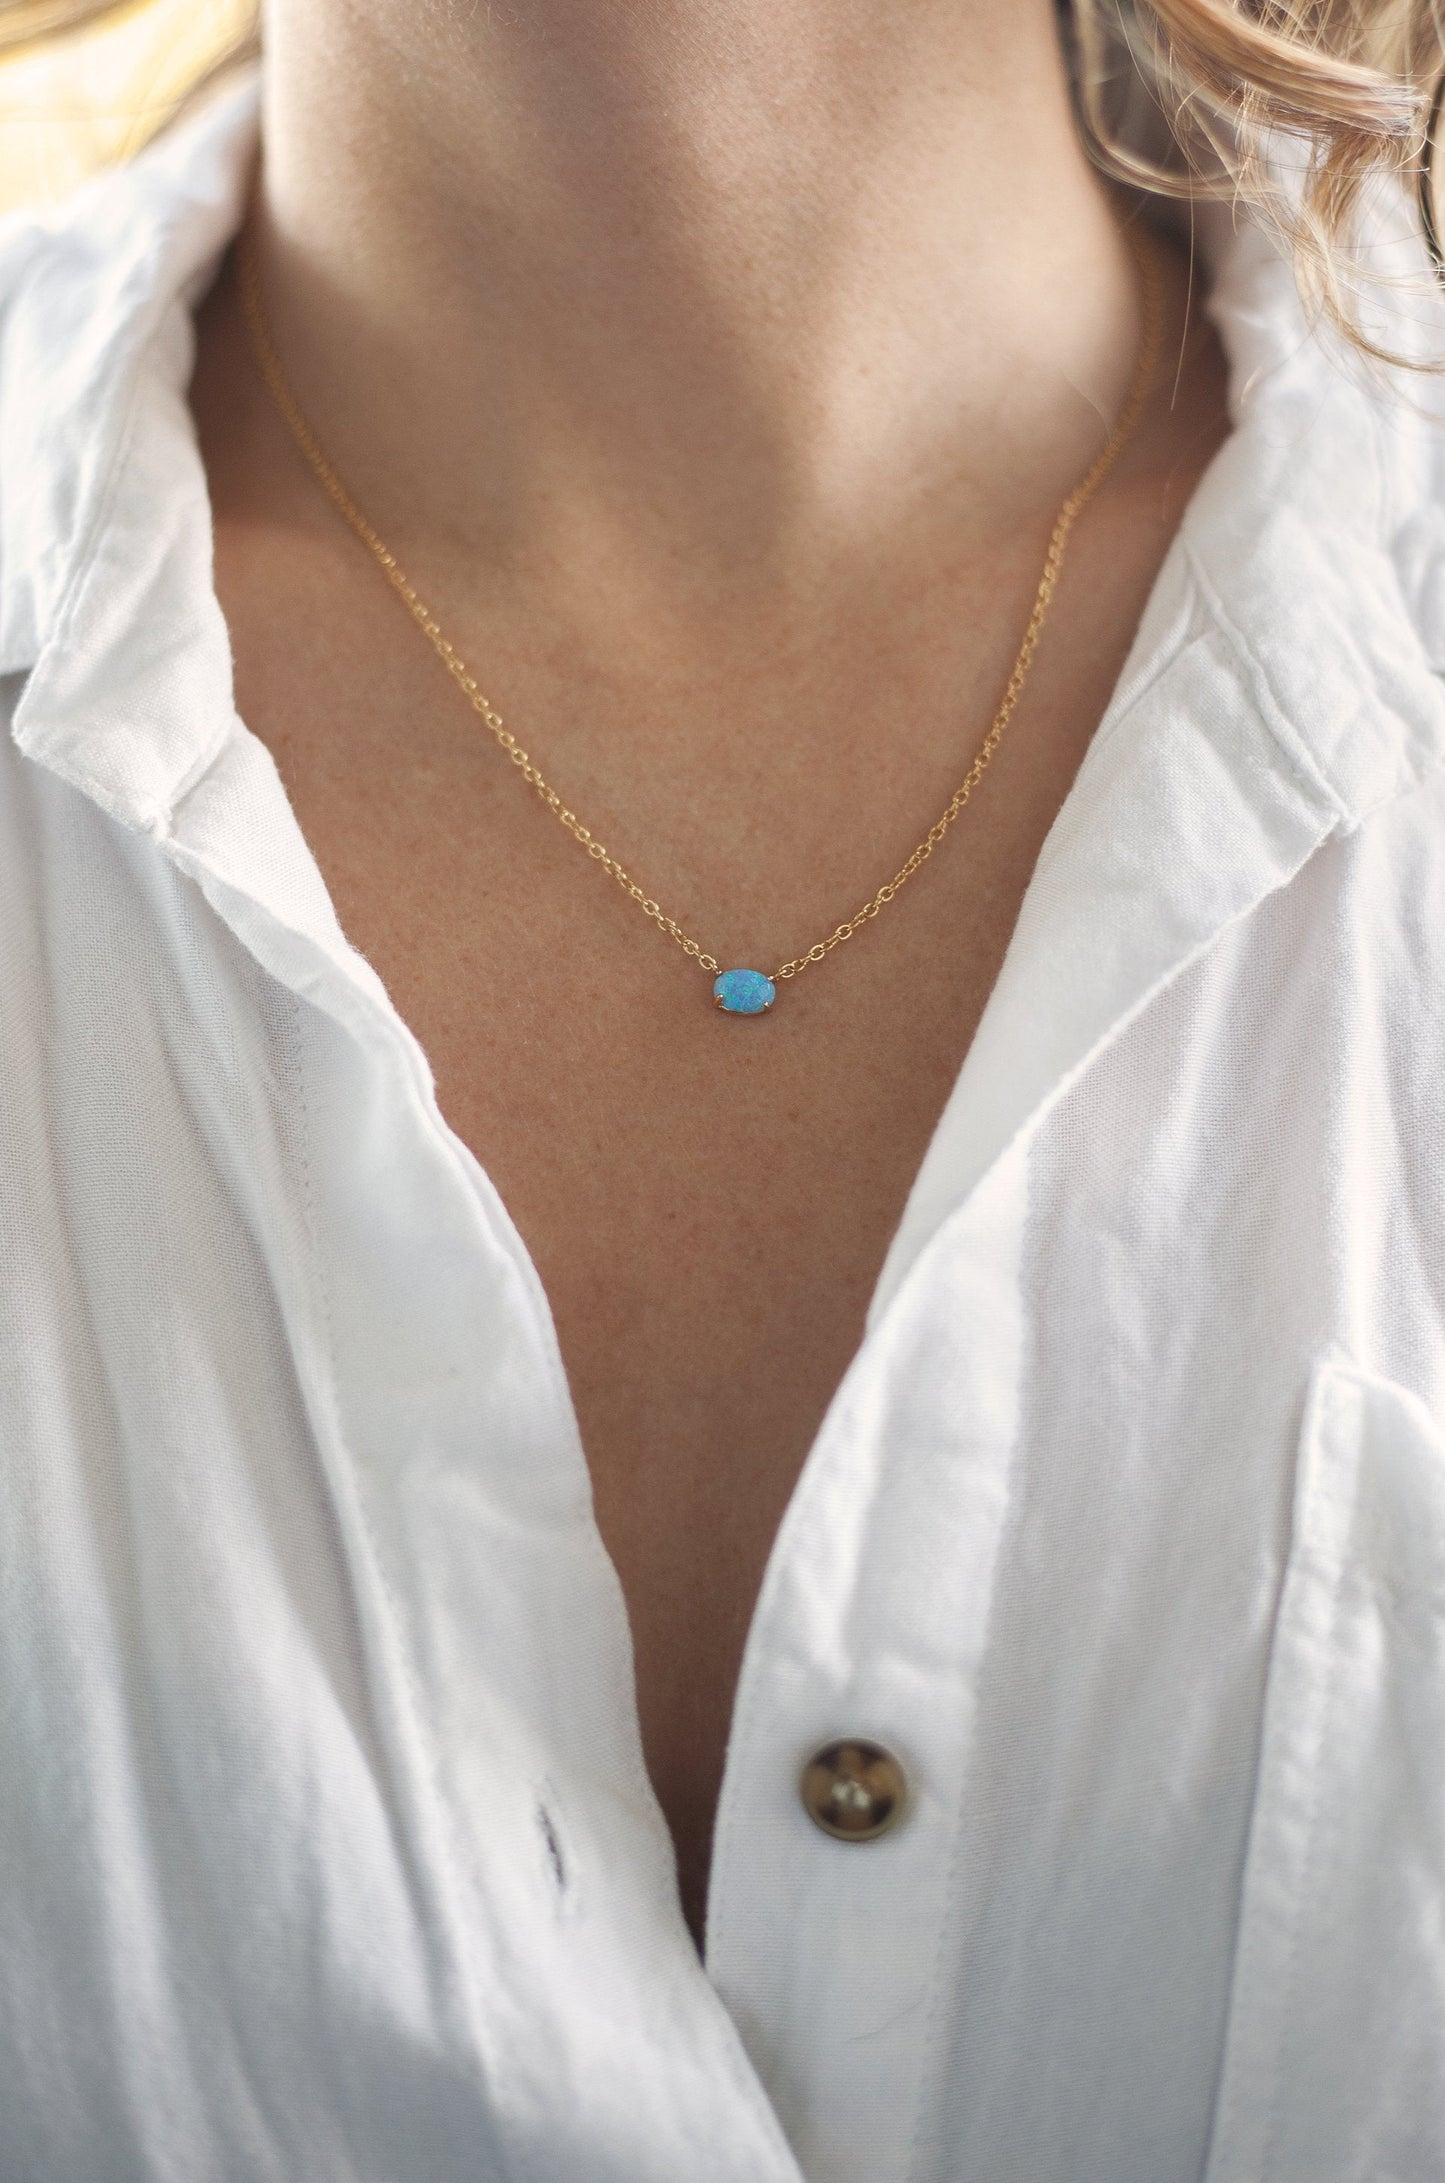 Keepsake Kyocera Opal & 18kt Gold Plated Necklace in blue opal on model